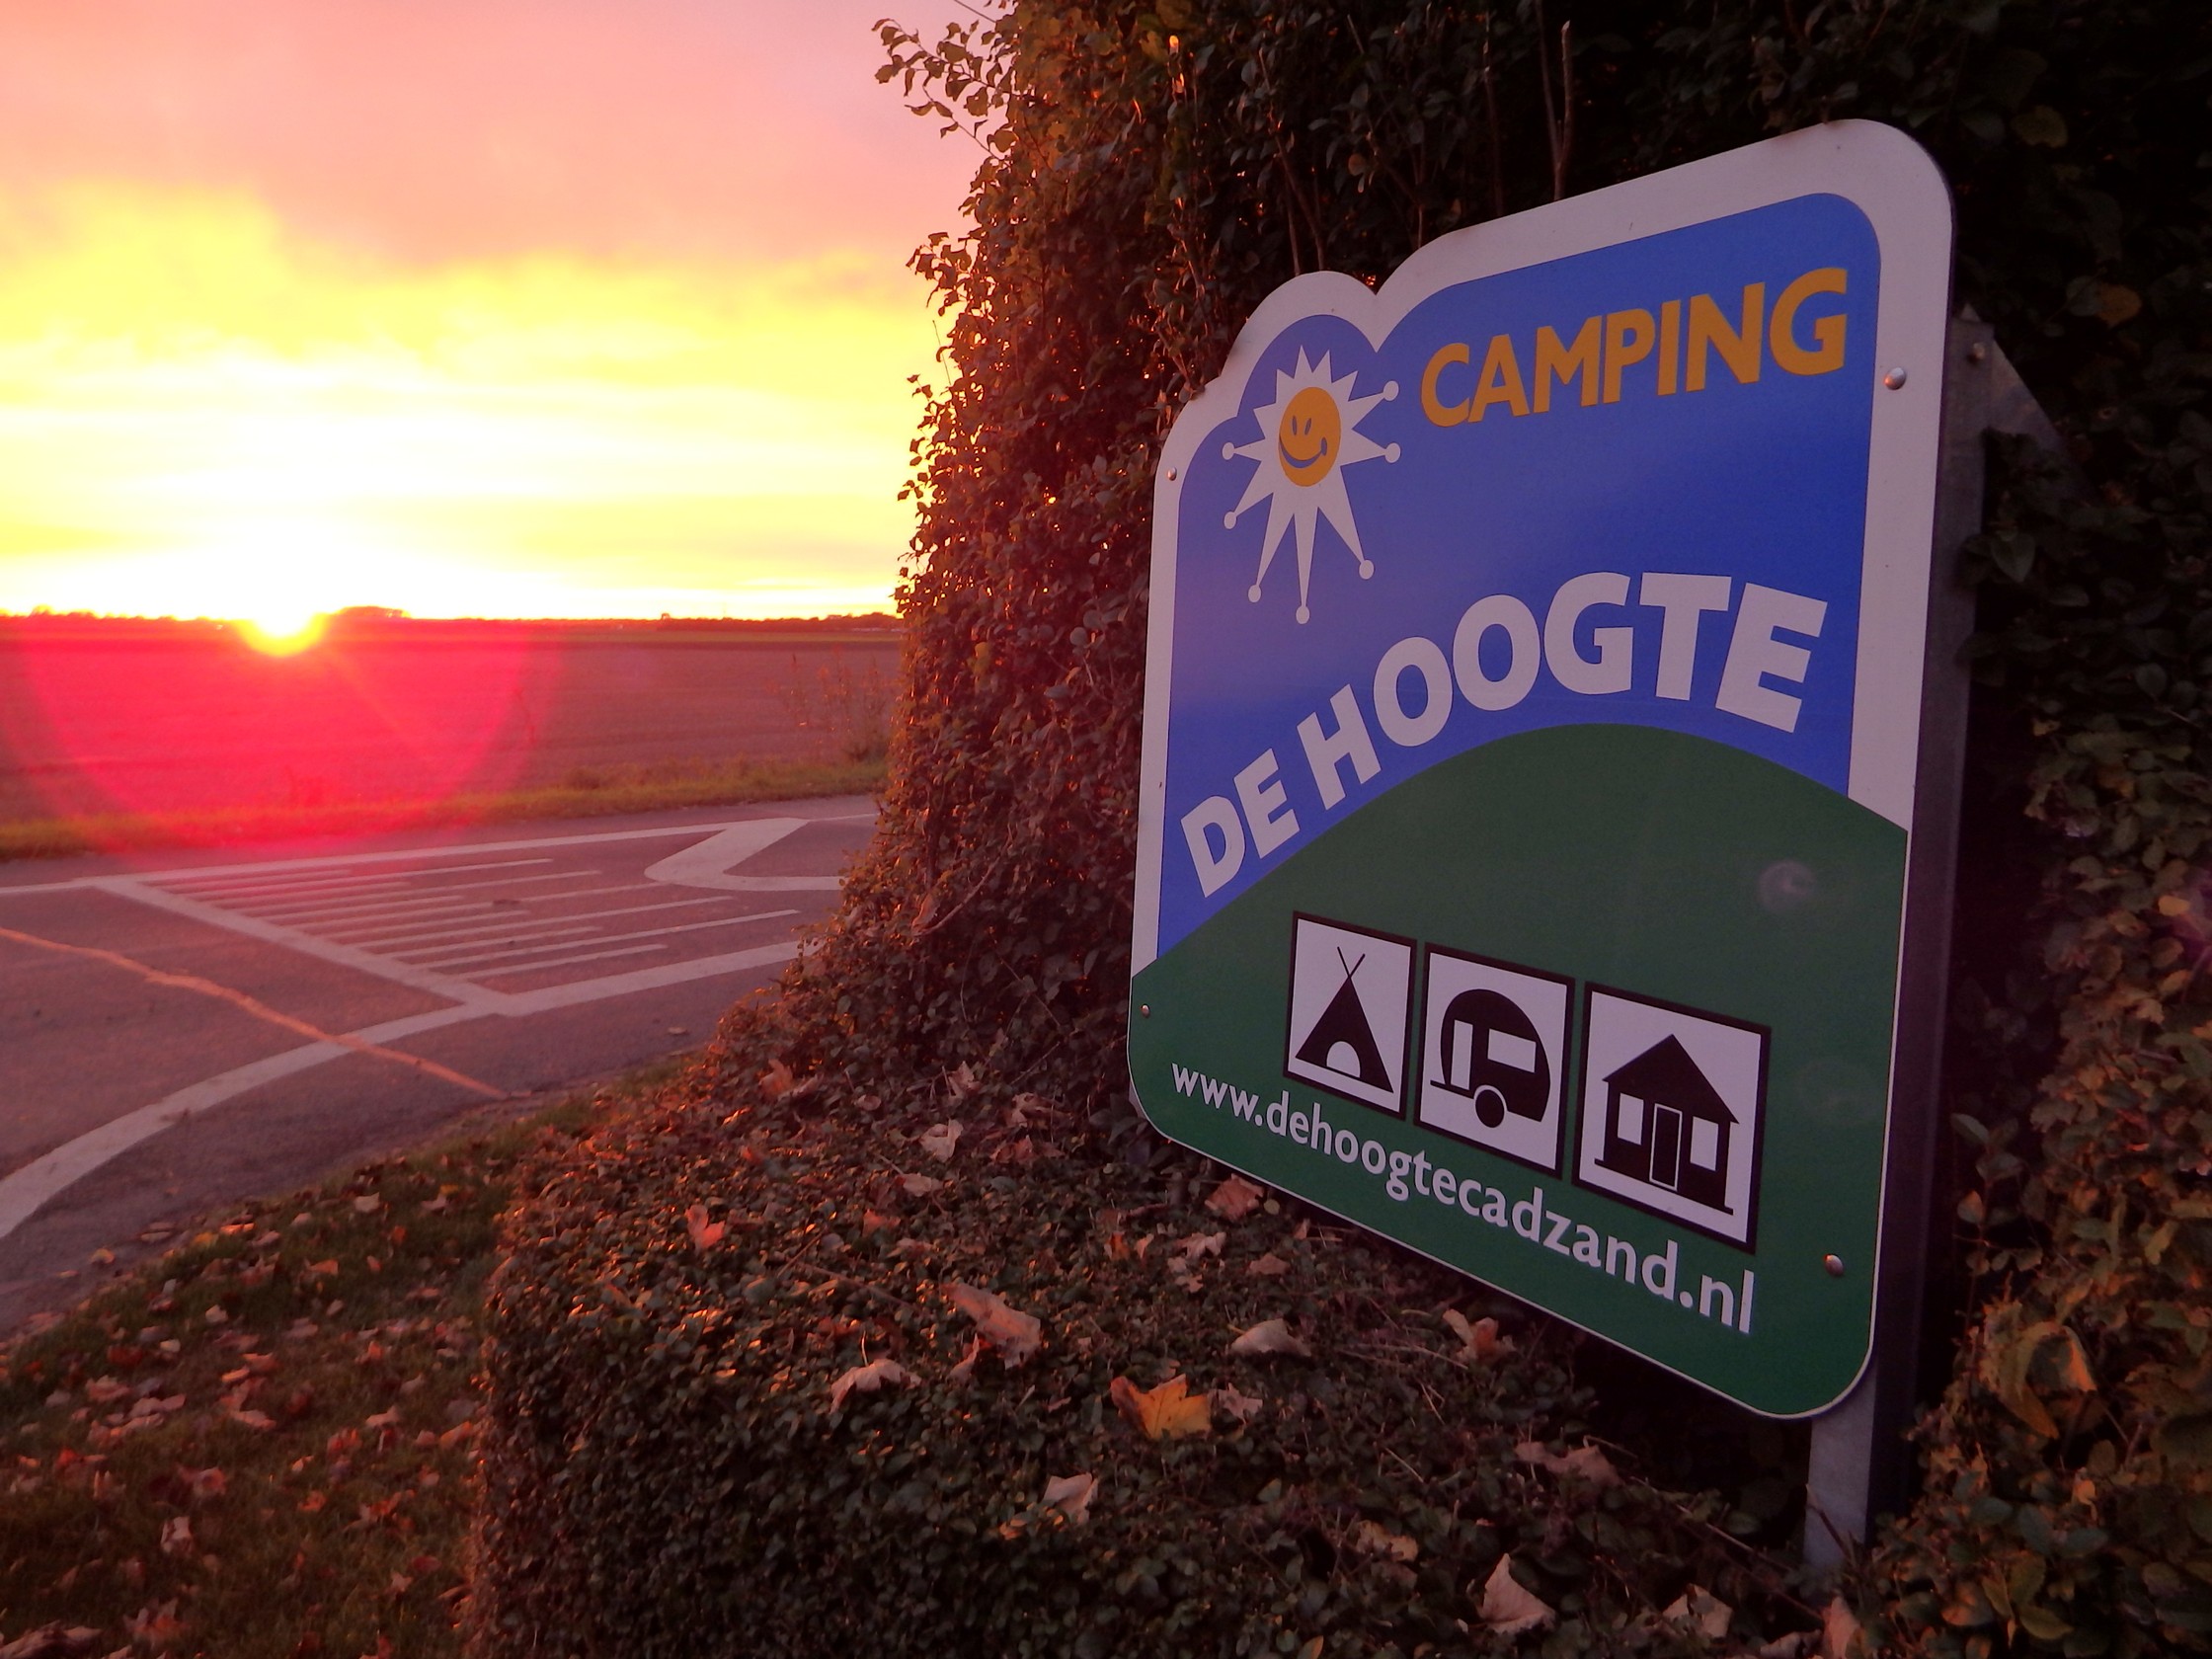 Routebeschrijving naar Camping de Hoogte Cadzand